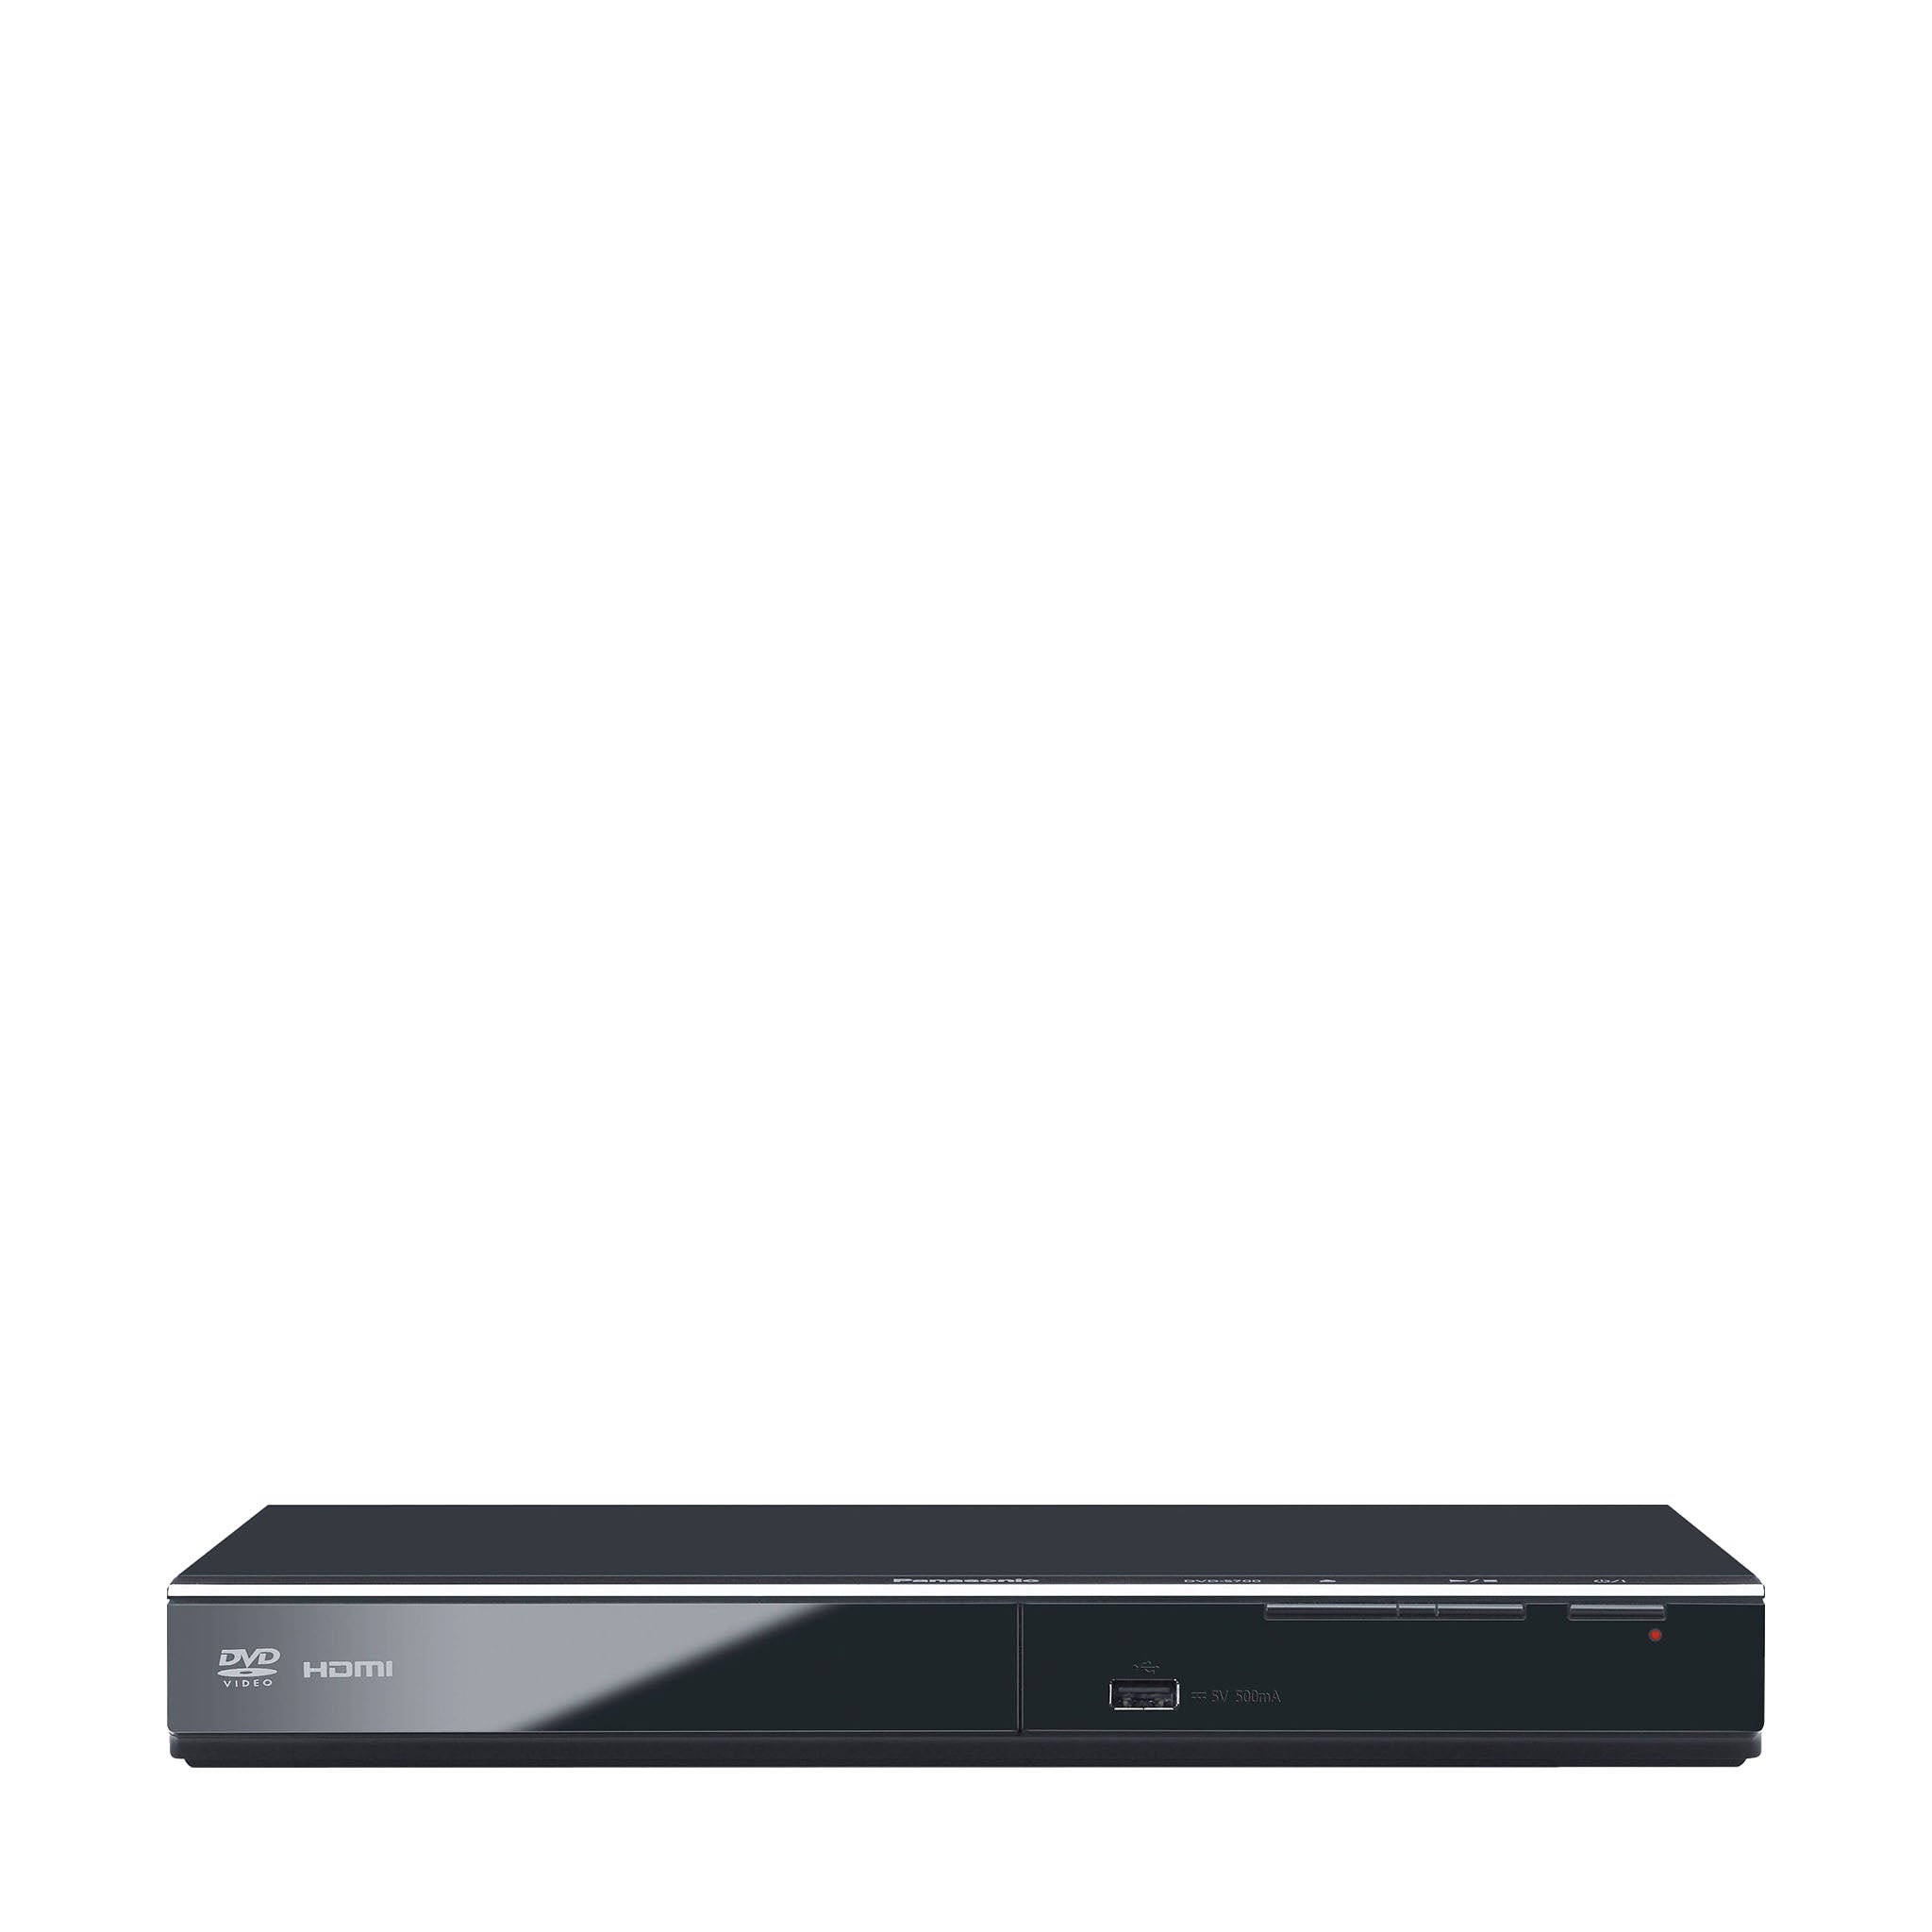 Panasonic 4K Blu-ray Player with Ultra HD Premium Video Playback and Hi-Res  Audio - DP-UB154P-K